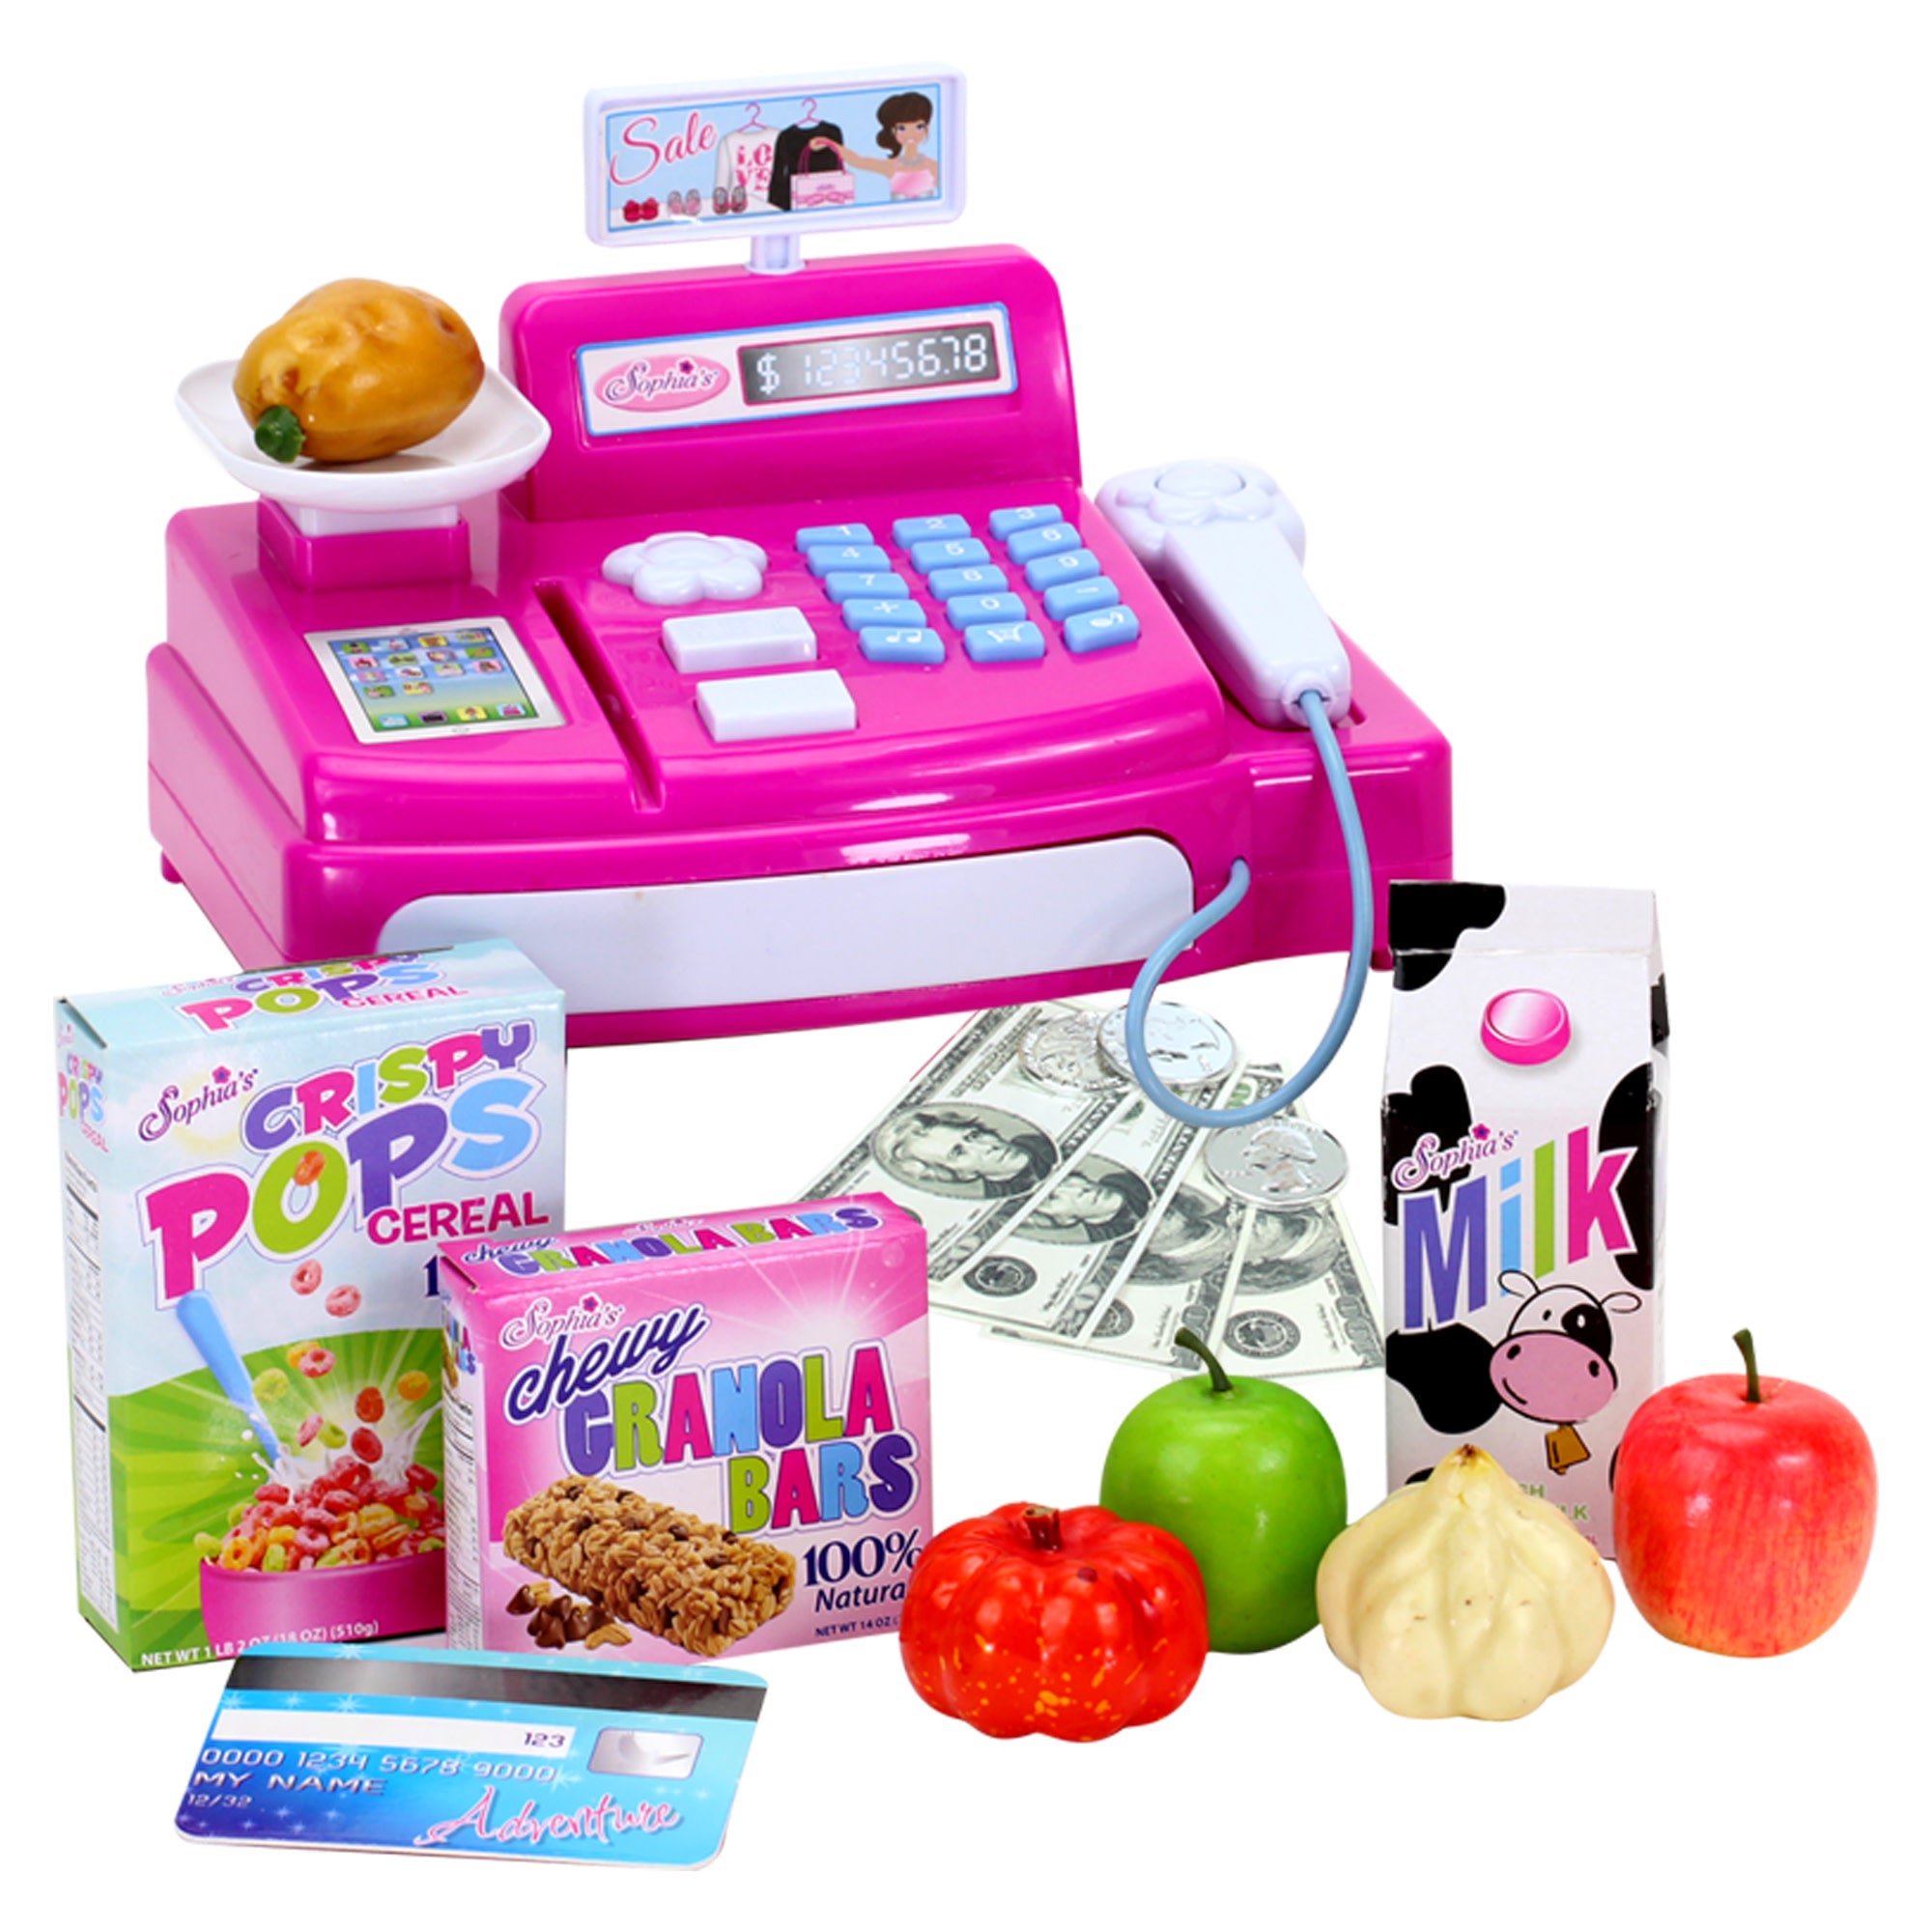 Sophia's Cash Register, Grocery Food and Money Set for 18" Dolls